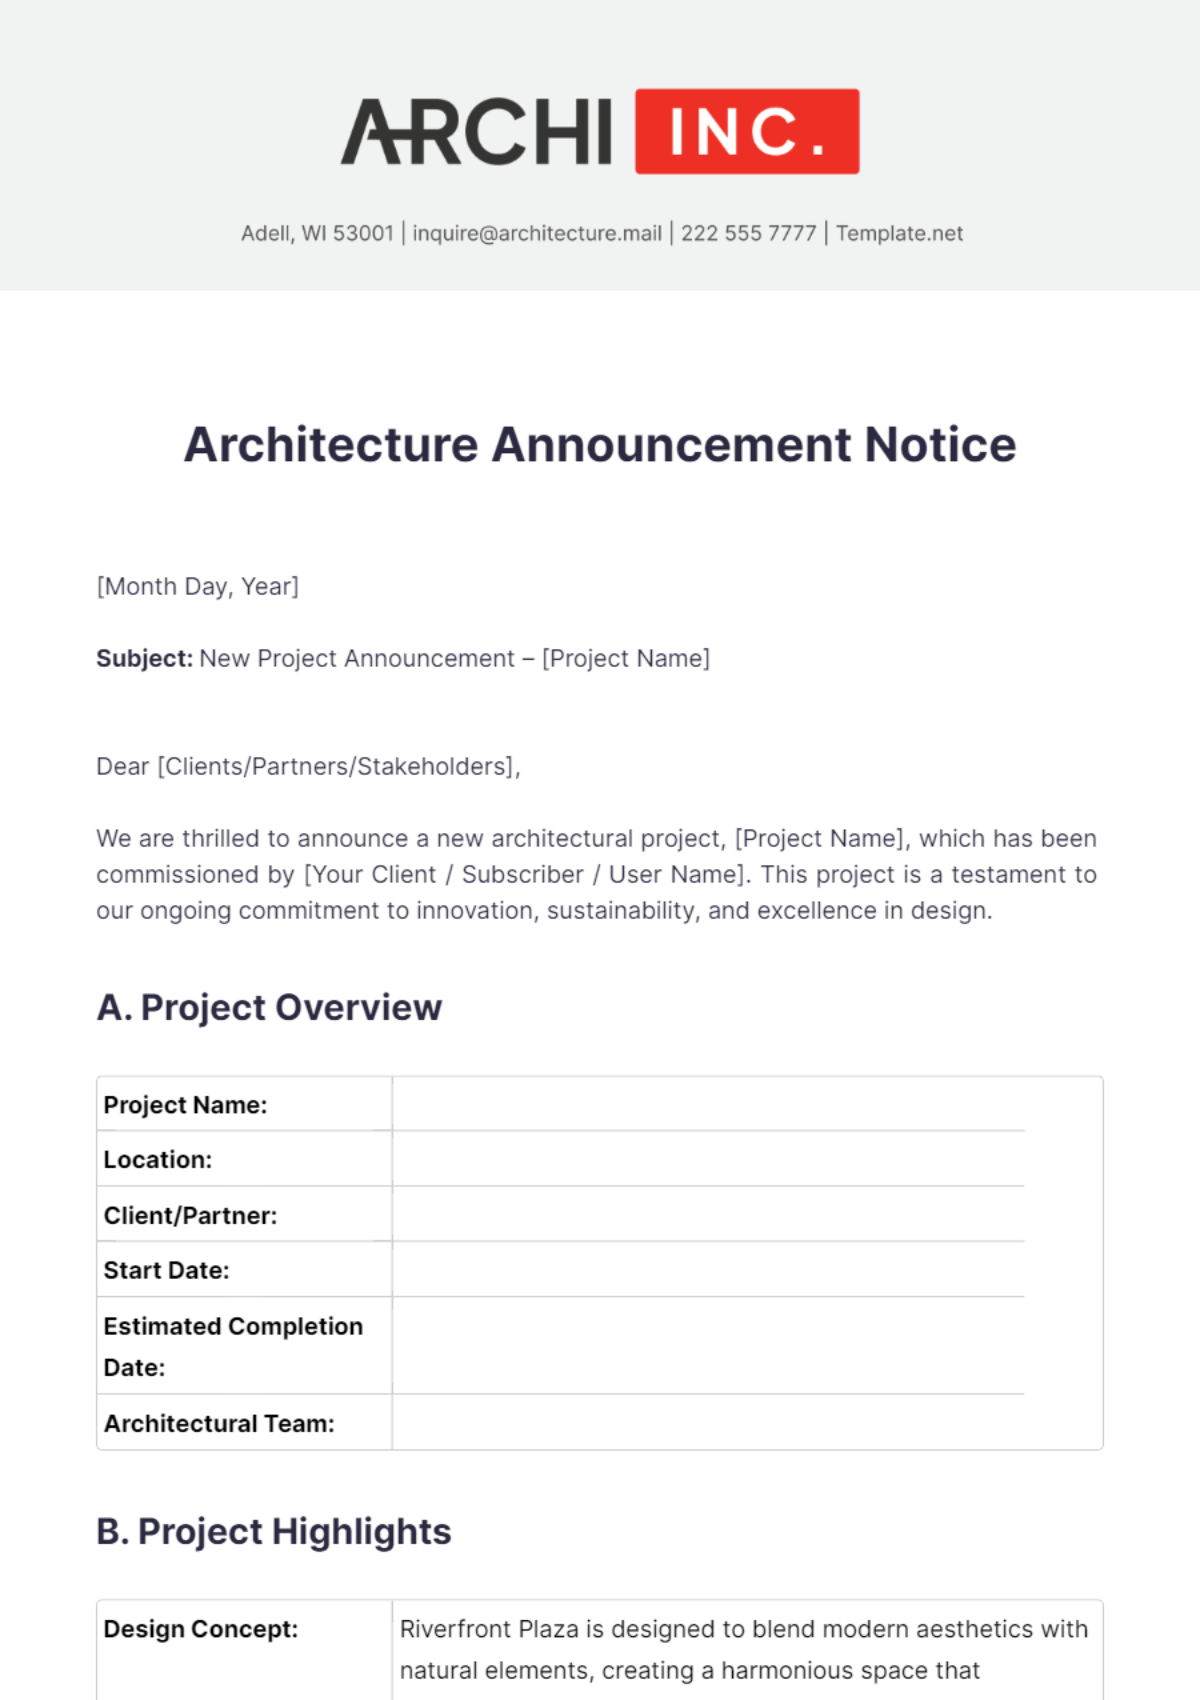 Free Architecture Announcement Notice Template